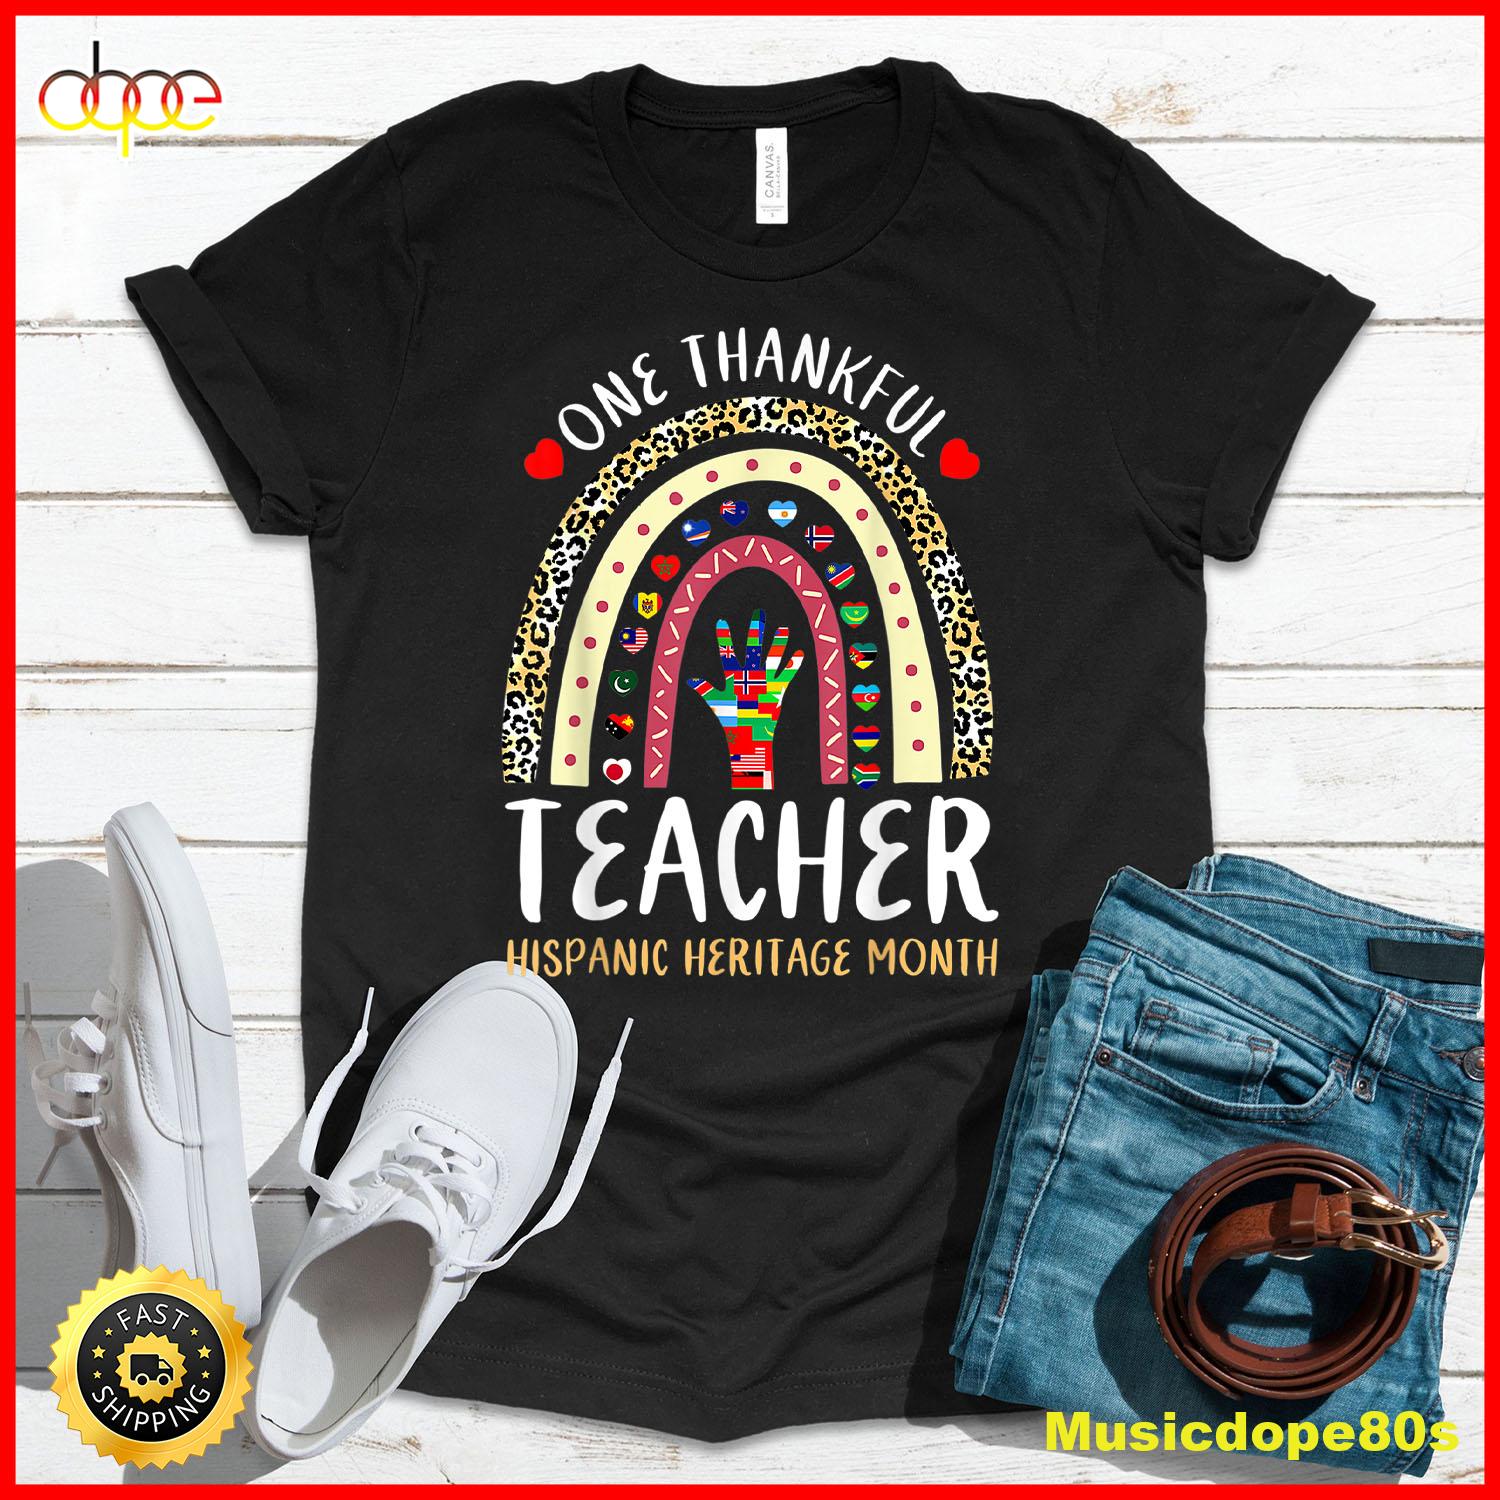 Teacher Hispanic Heritage Month Countries One Thankful T T Shirt